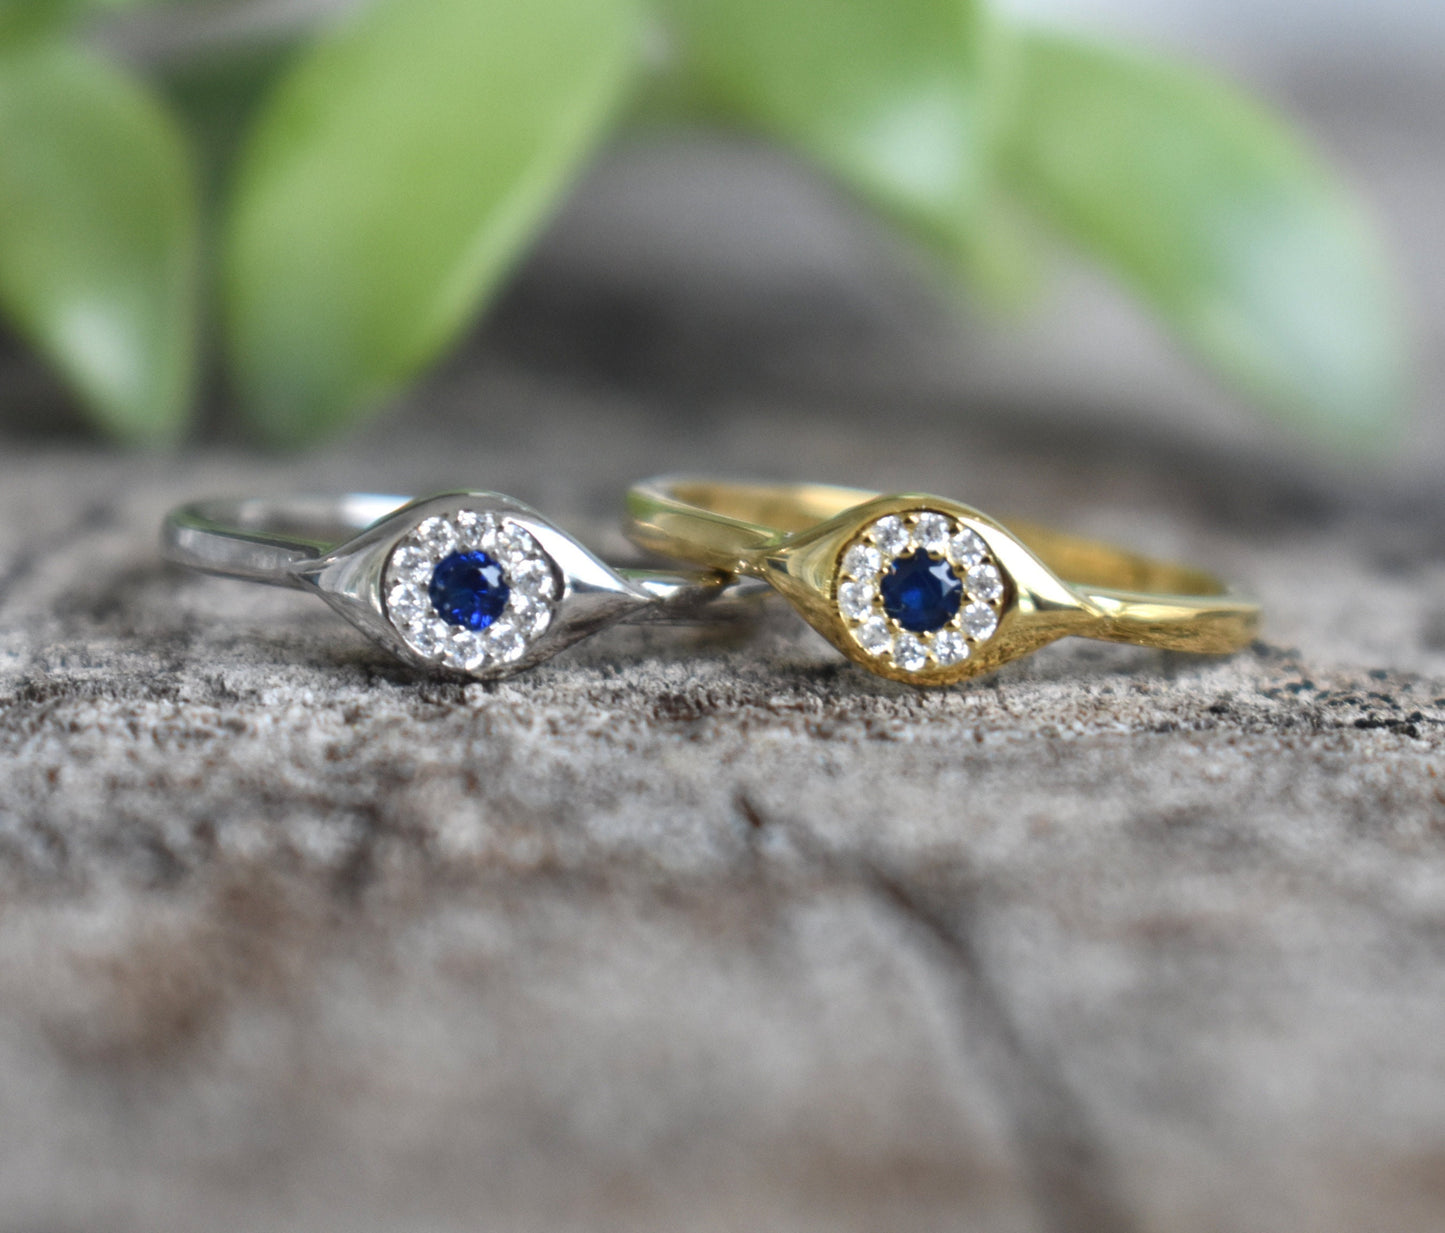 Evil Eye Ring- Silver Ring, Swarovski Crystal Ring, Greek Evil Eye- Gold Ring, Protection Ring